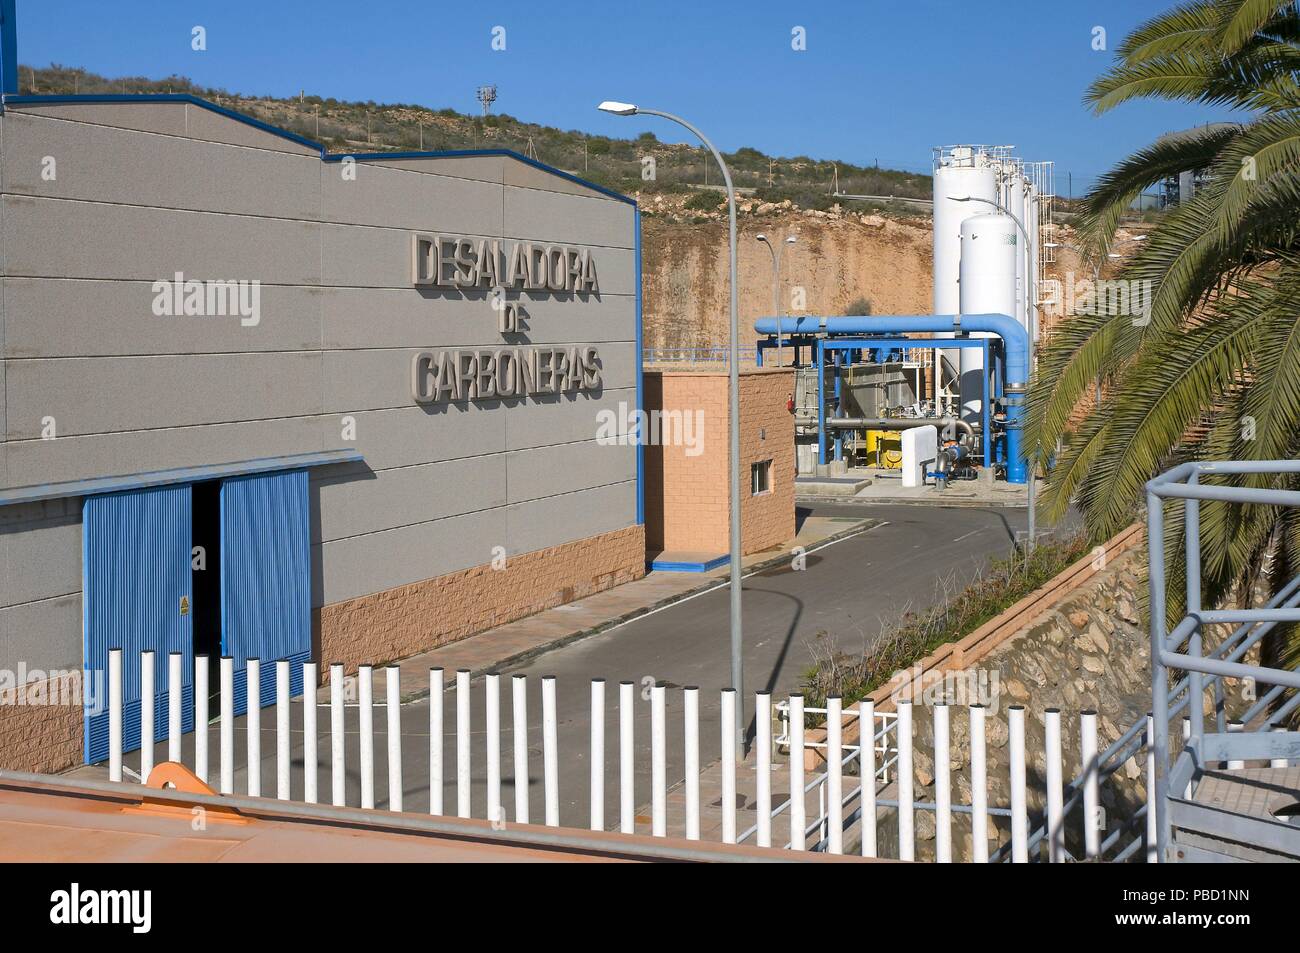 Desalination plant, Carboneras, Almeria province, Region of Andalusia ...